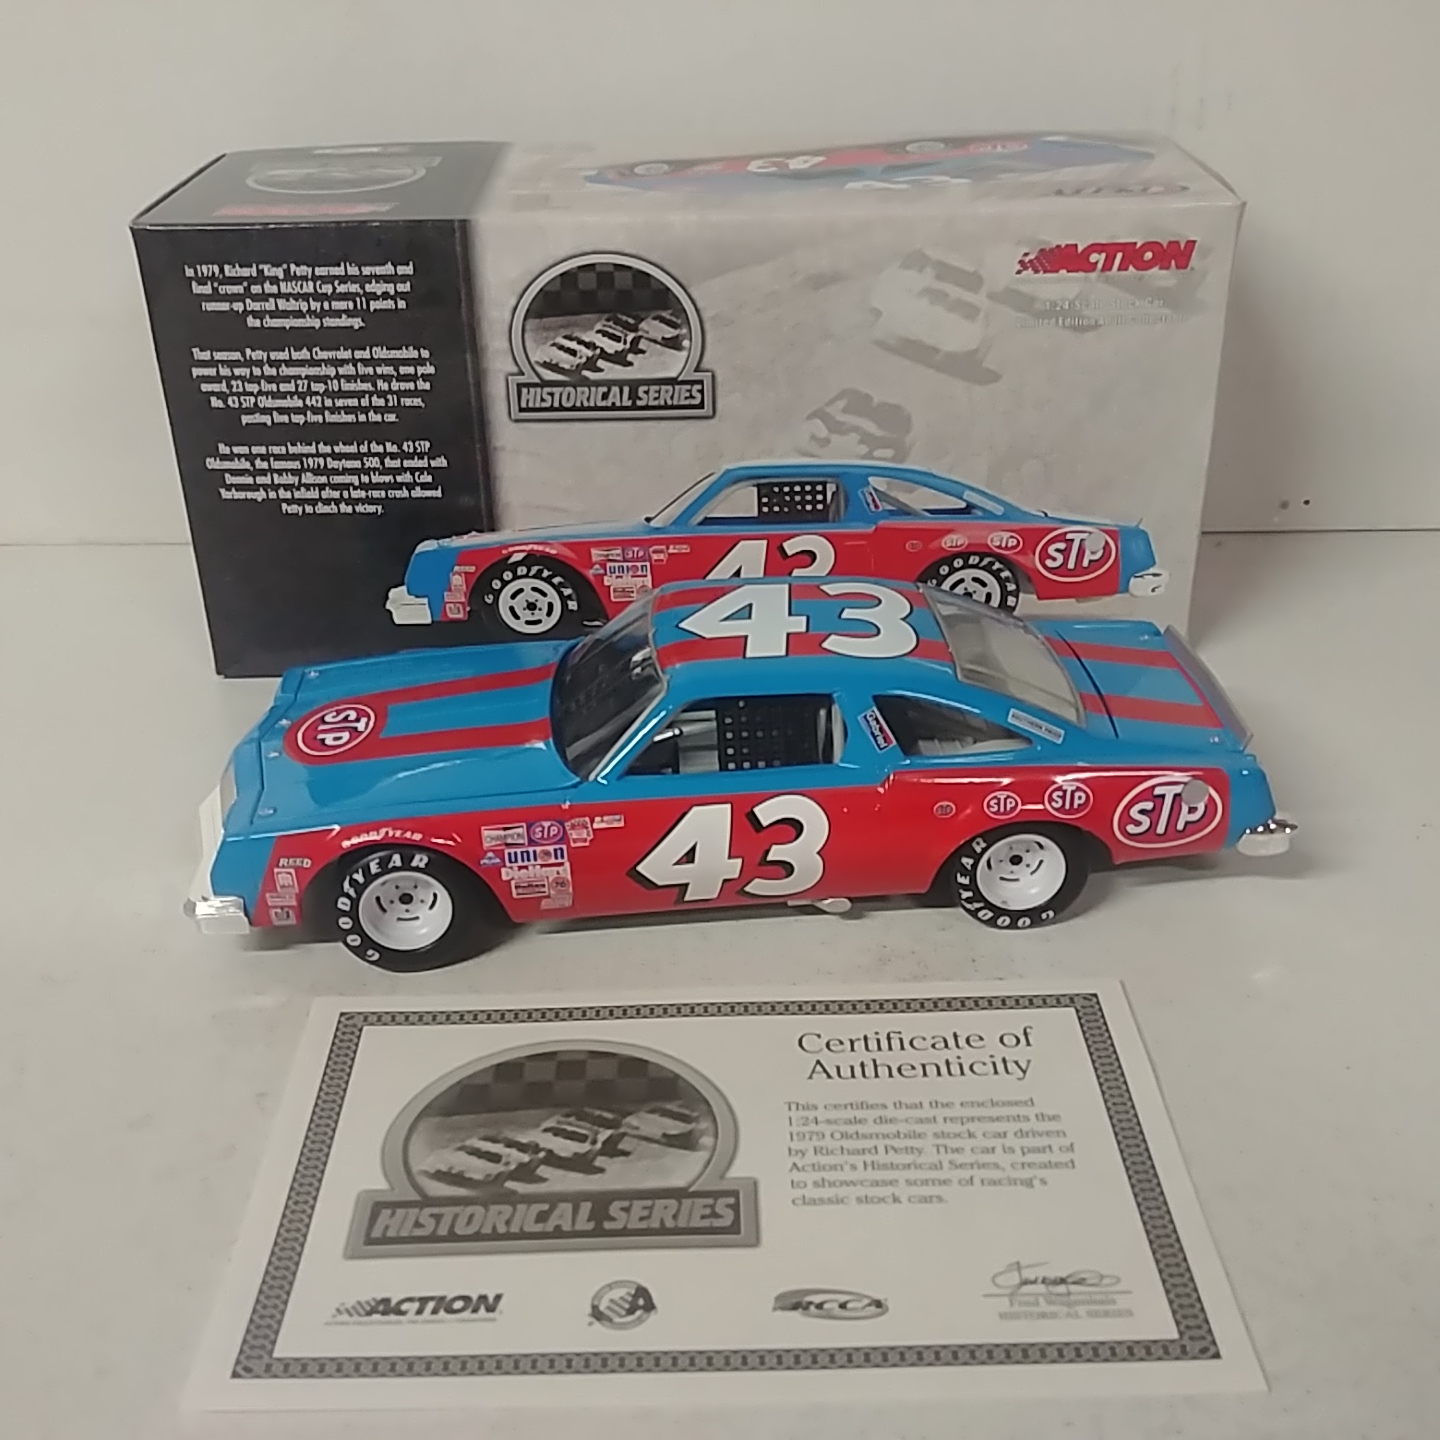 1979 Richard Petty 1/24th STP Oldsmobile "Winston Cup Champion" Historical Series c/w car